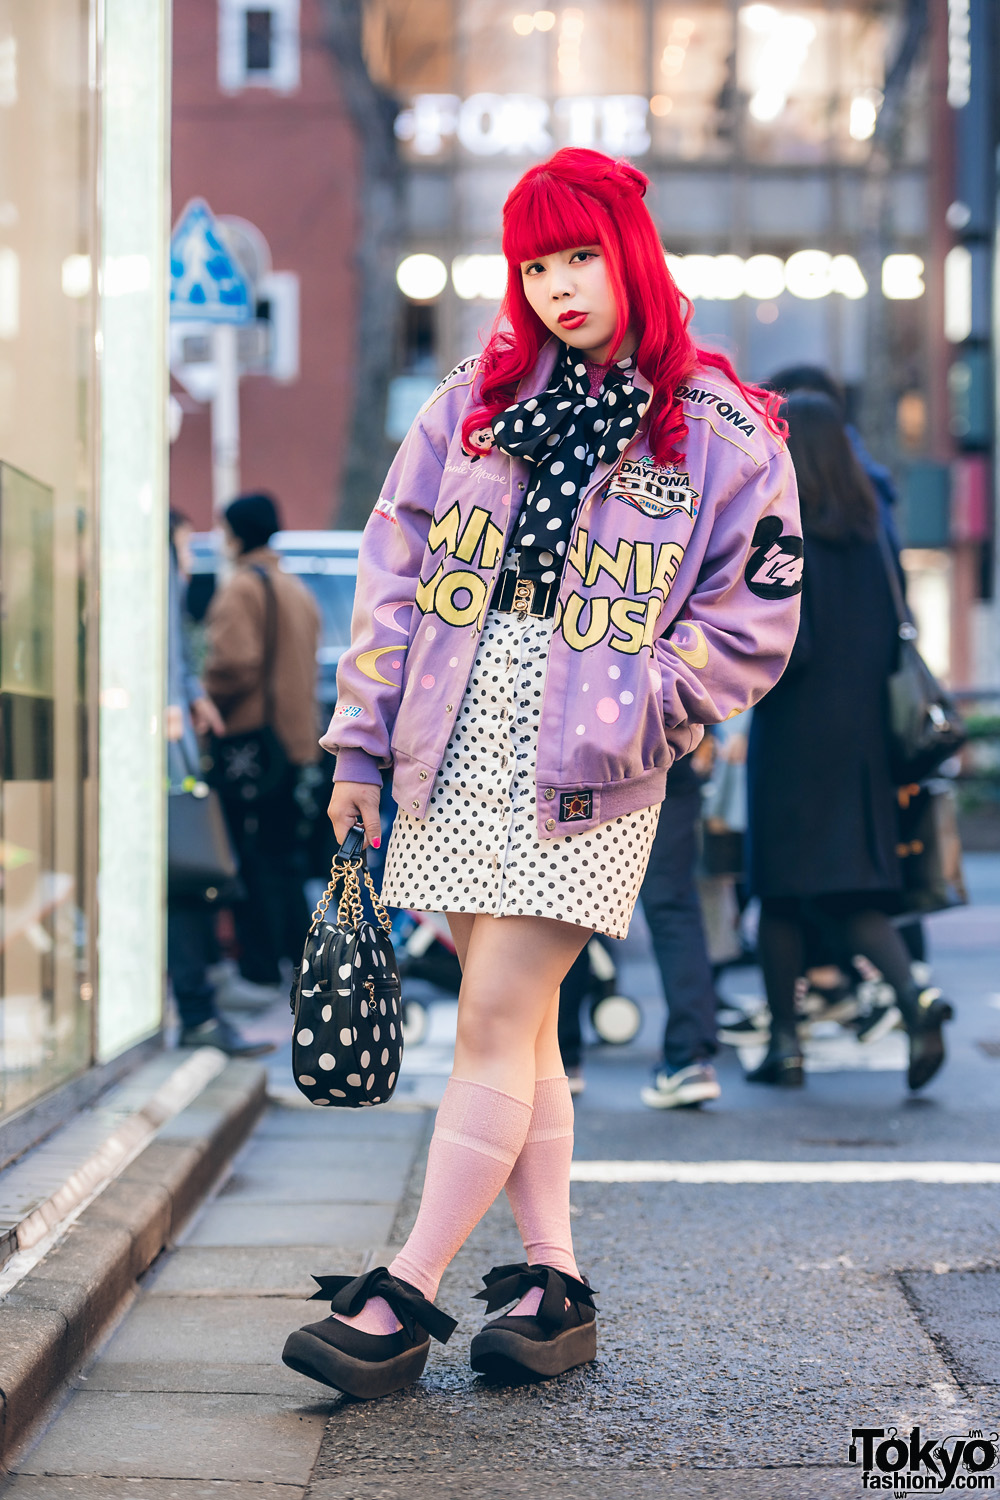 Polka Dot Tokyo Street Fashion w/ Red Braided Hair, Daytona 500 Minnie Mouse Jacket, Kinji Shimokitazawa, Kiki2 Skirt, Tokyo Bopper Bow Shoes & Round Bag